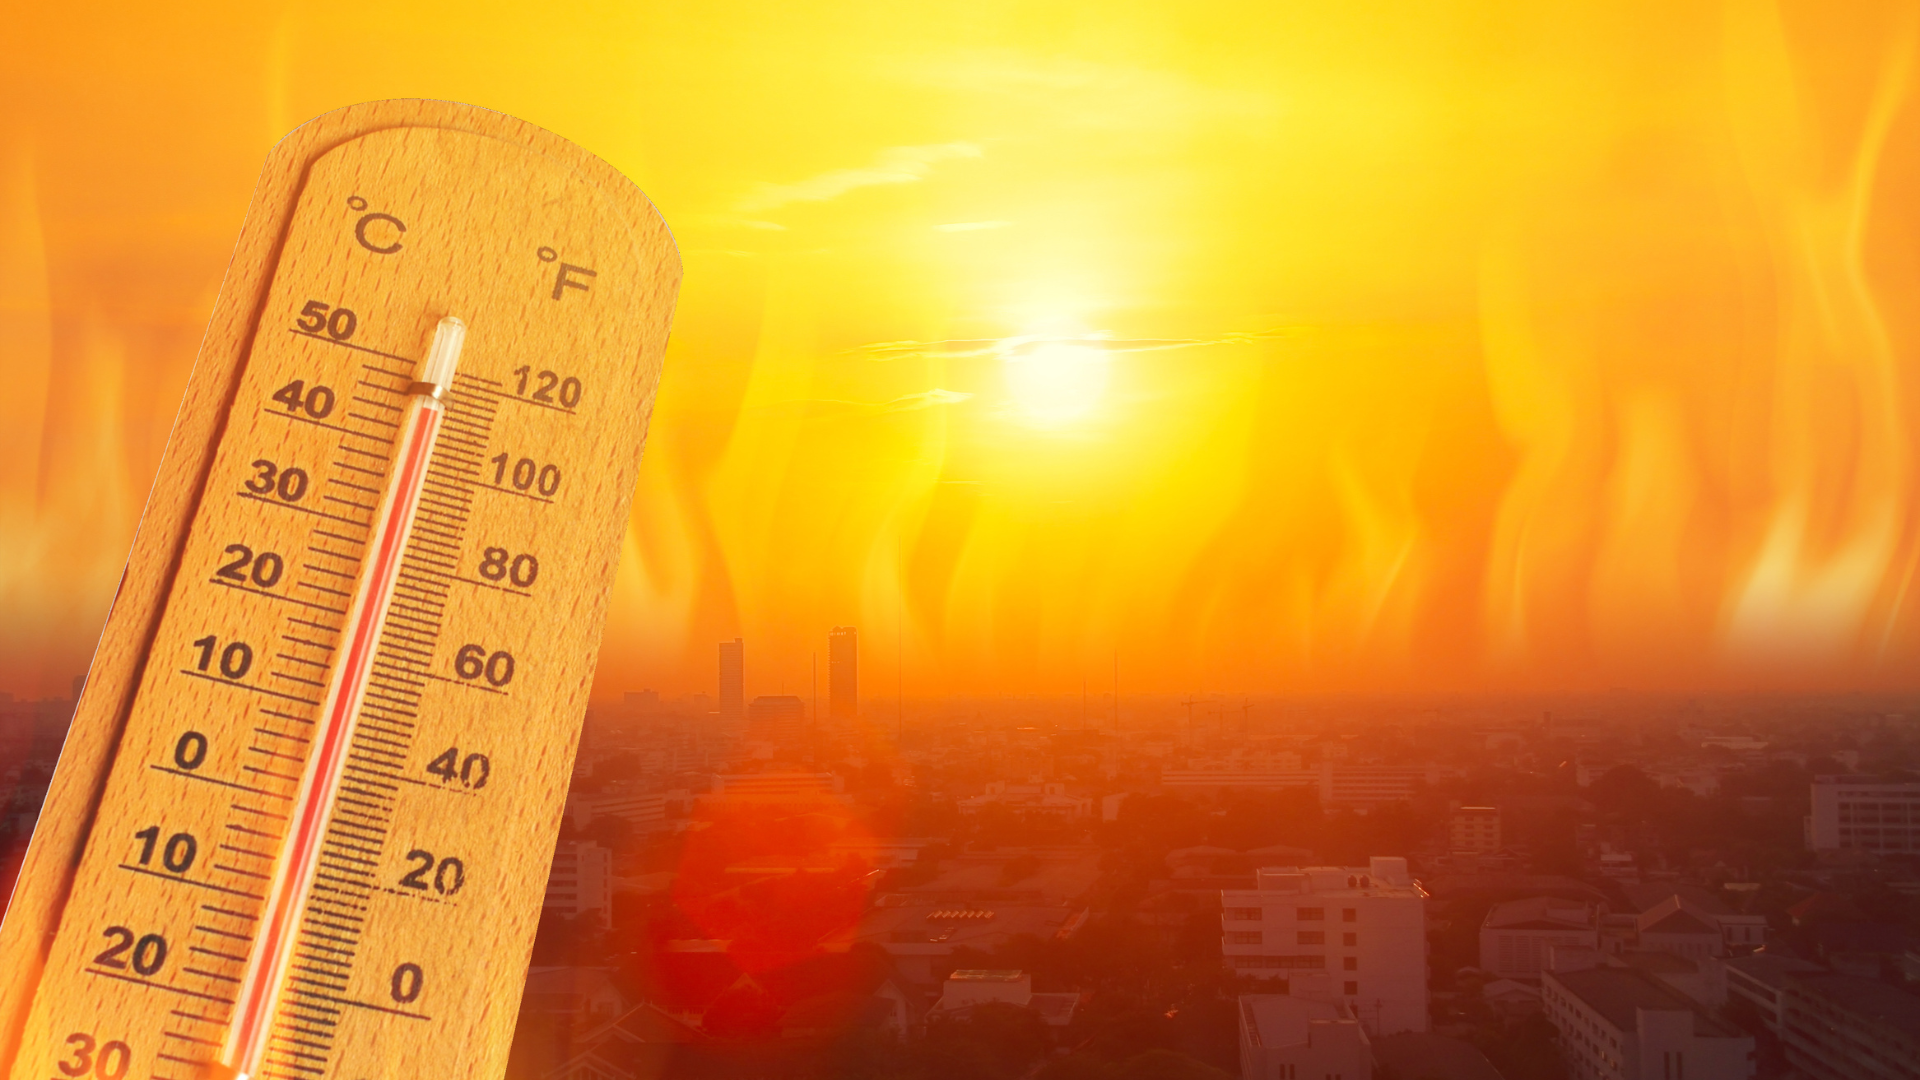  Clark area heat index hits 50 degrees Celsius